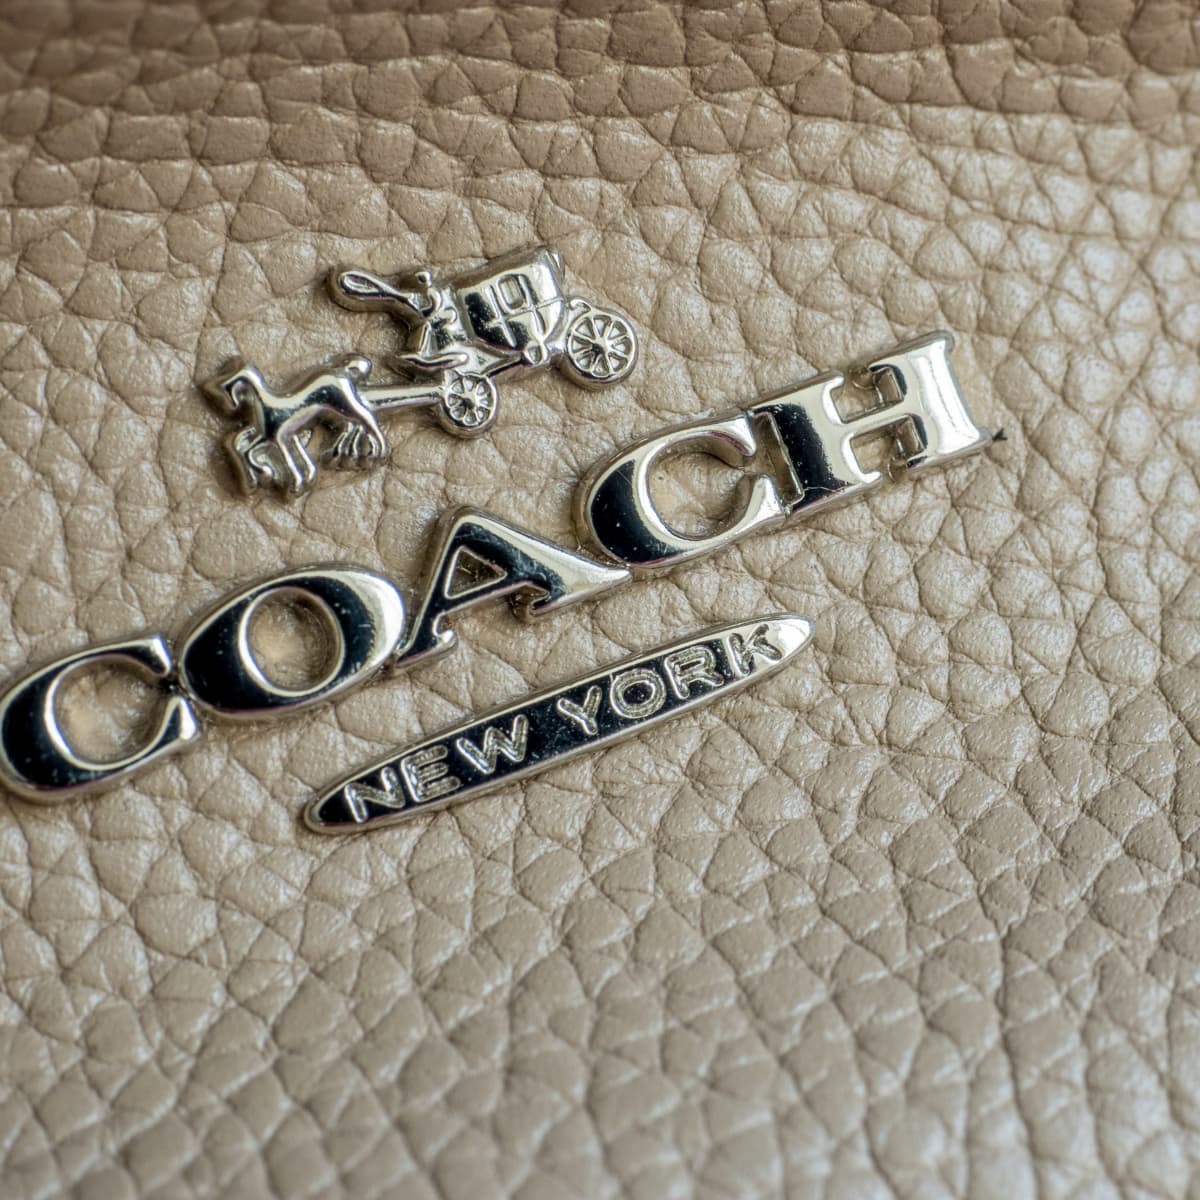 Coach Handbags Are Well Made and Stylish - Bellatory